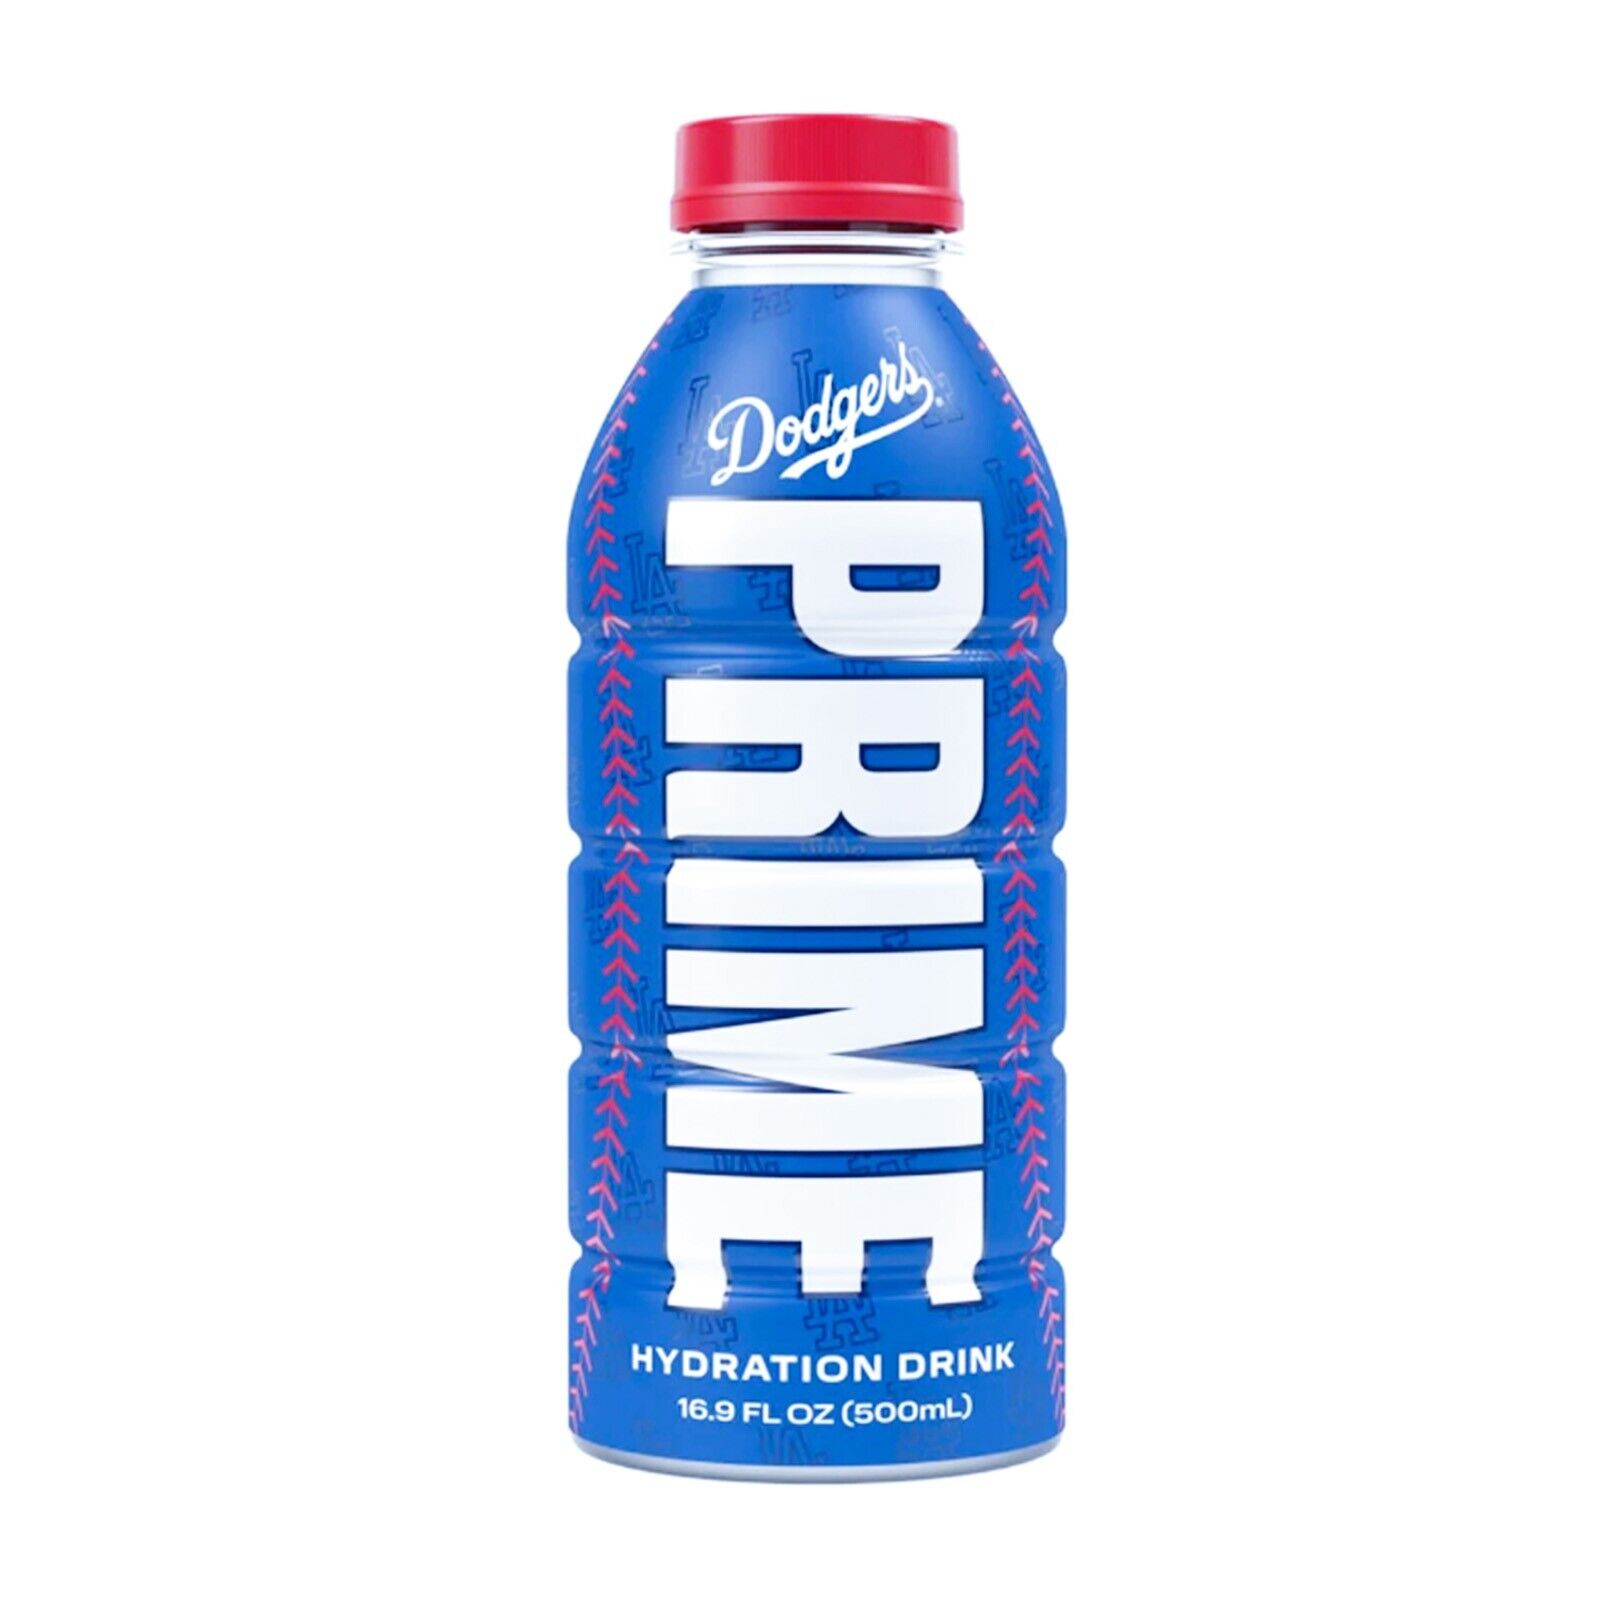 NEW  LIMITED Prime Hydration LA Dodgers Blue Limited Edition 16.9 FL OZ BOTTLE